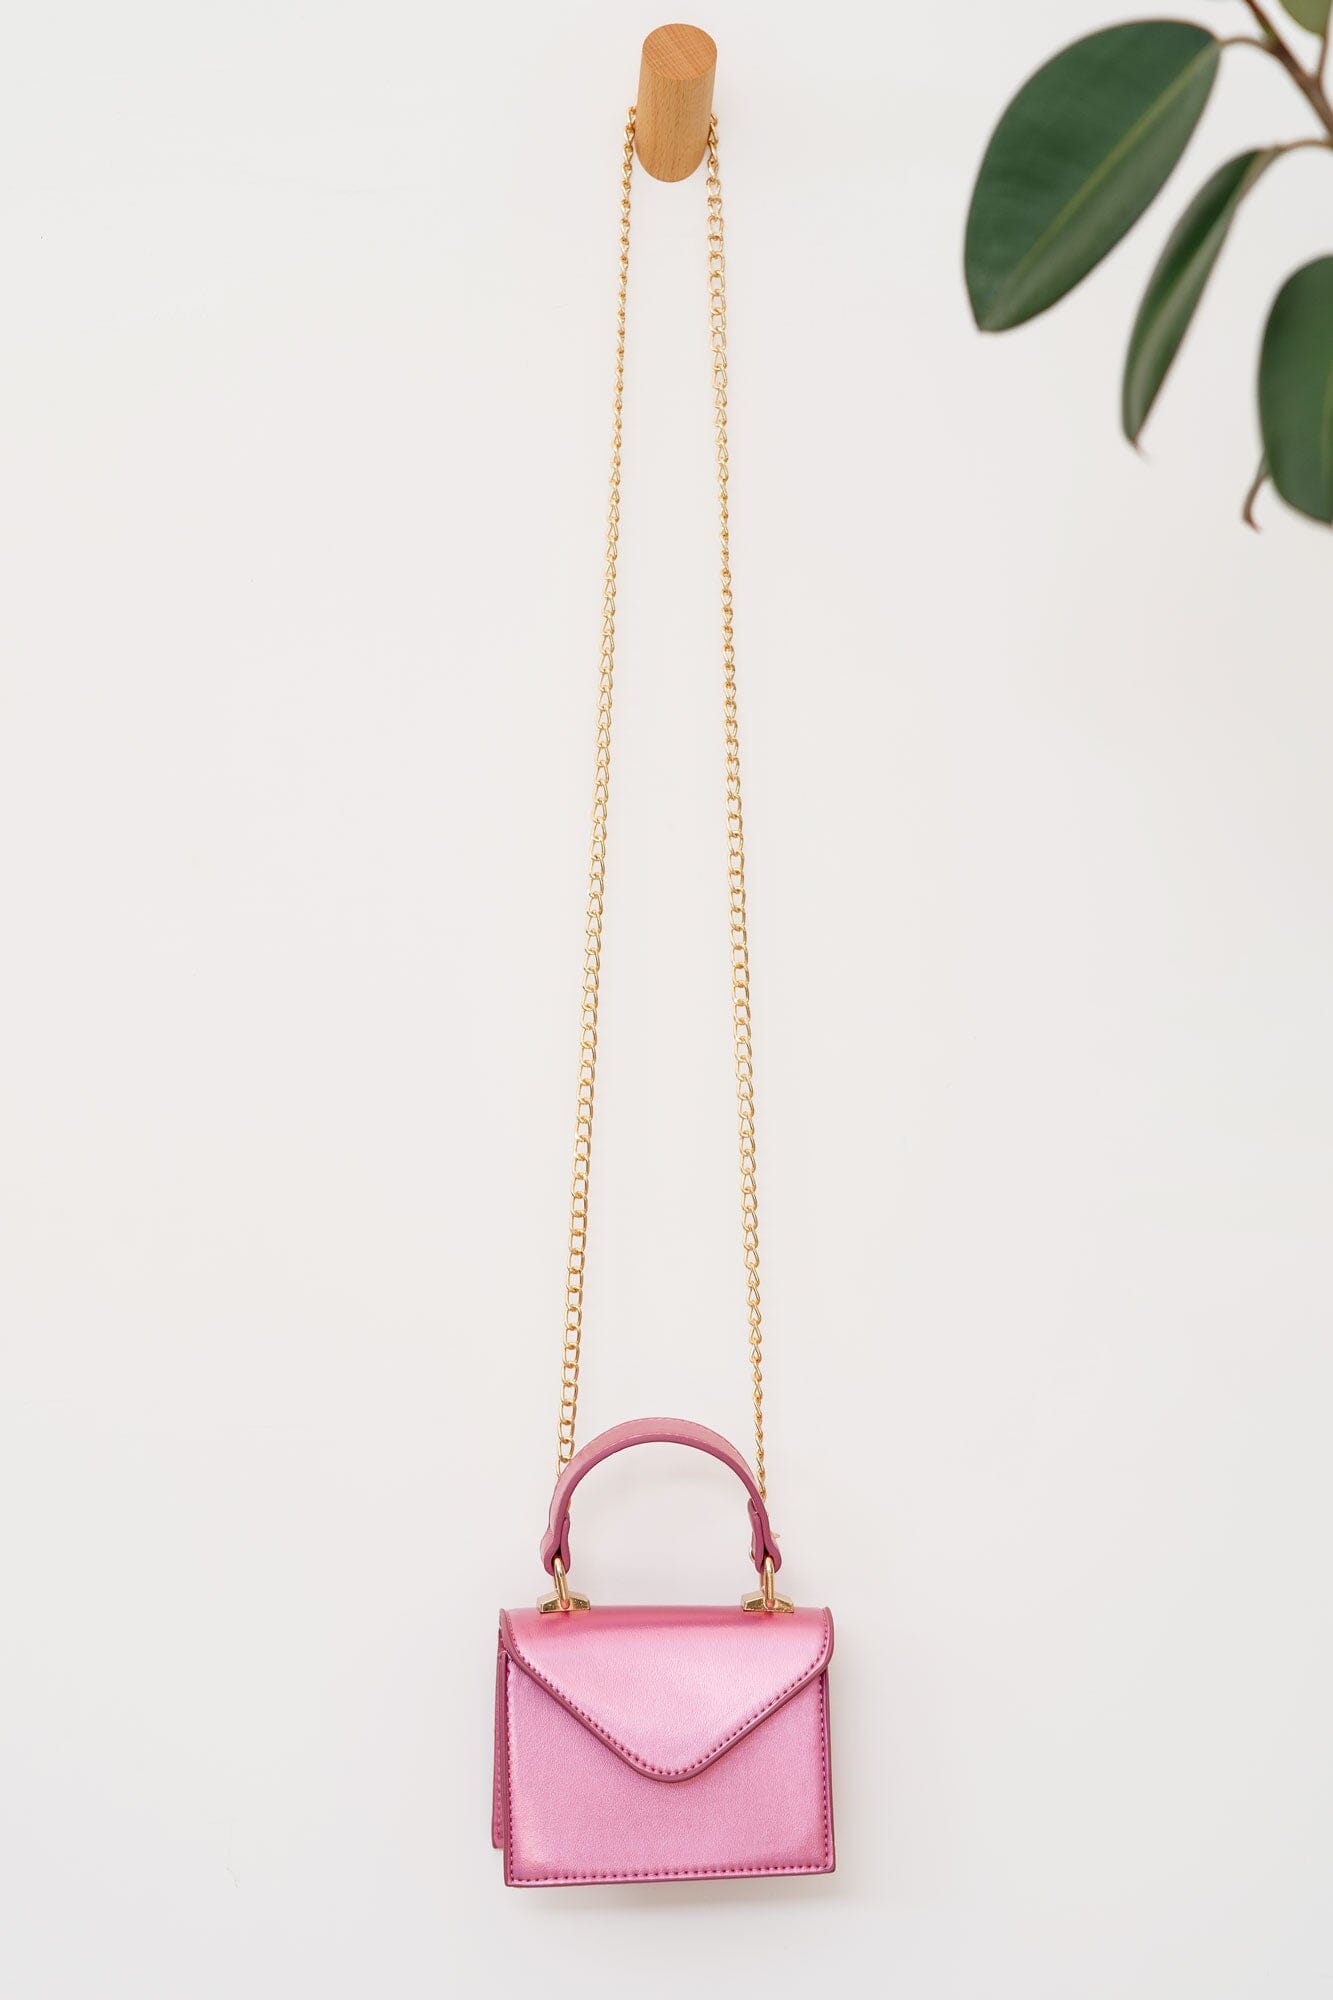 💕 Coach Poppy Heart Glam Tote Bag Metallic Pink 14551 Leather Handbag Purse  | eBay